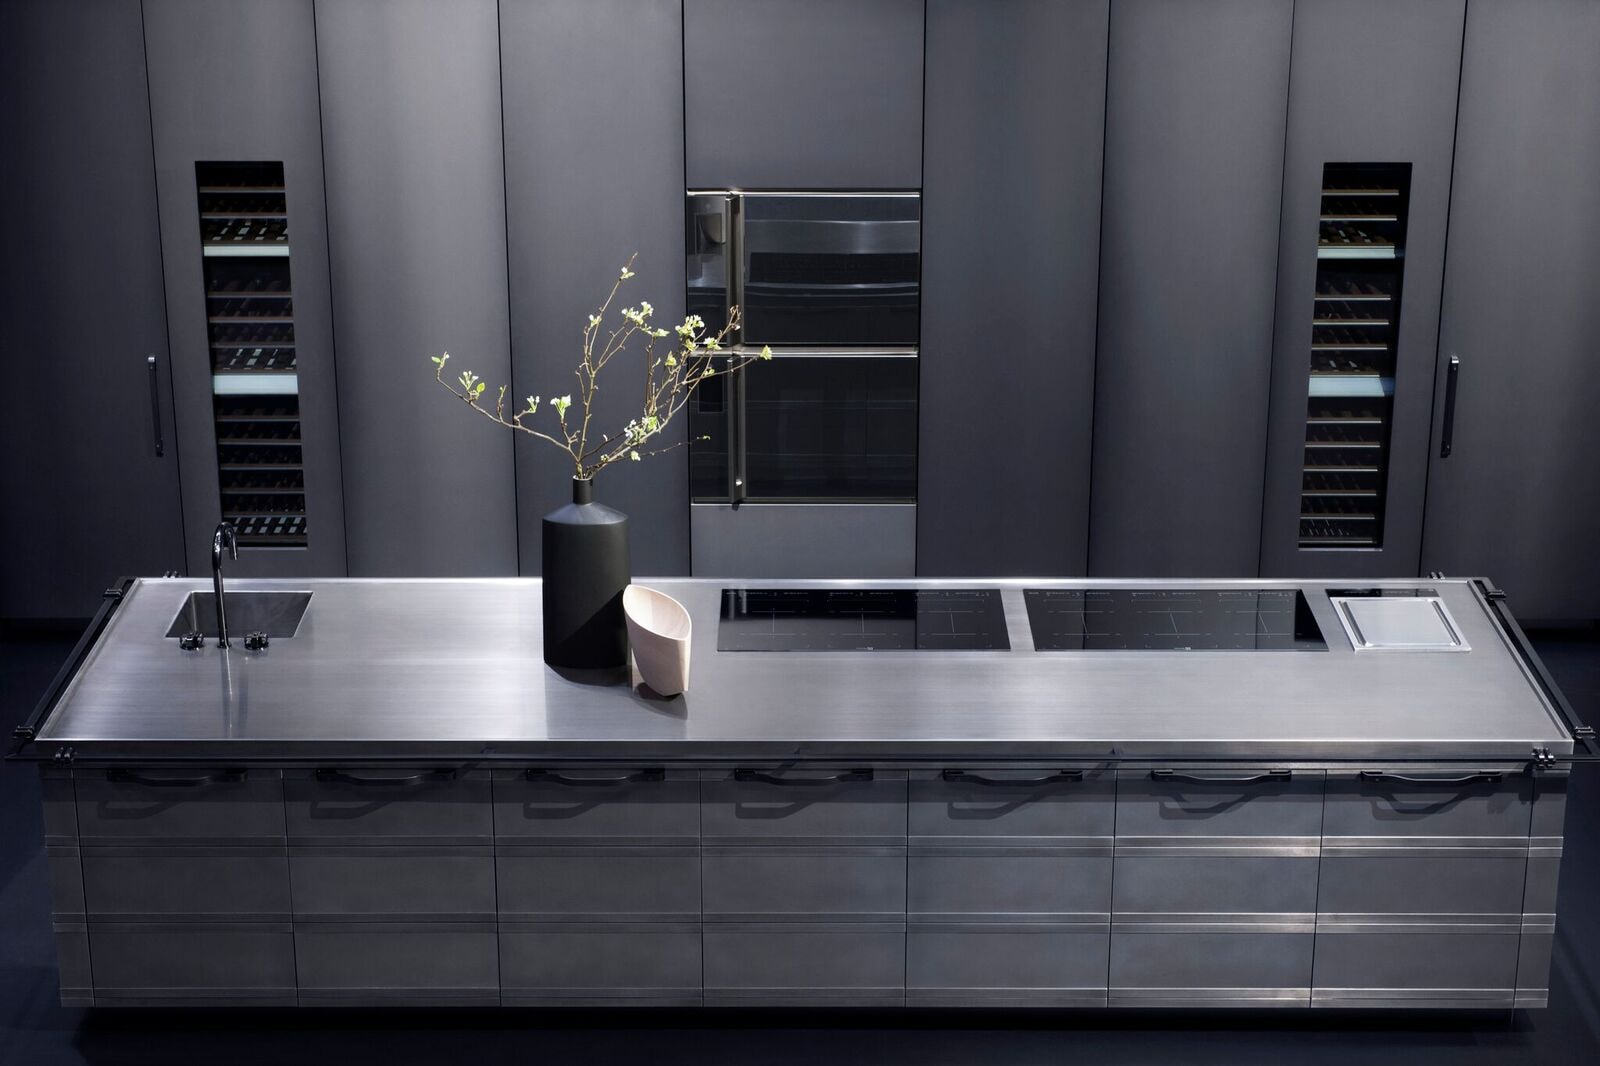 FENDI Scic Collaboration FENDICUISINE Kitchen Design Steel Grey Elegant karl lagerfeld